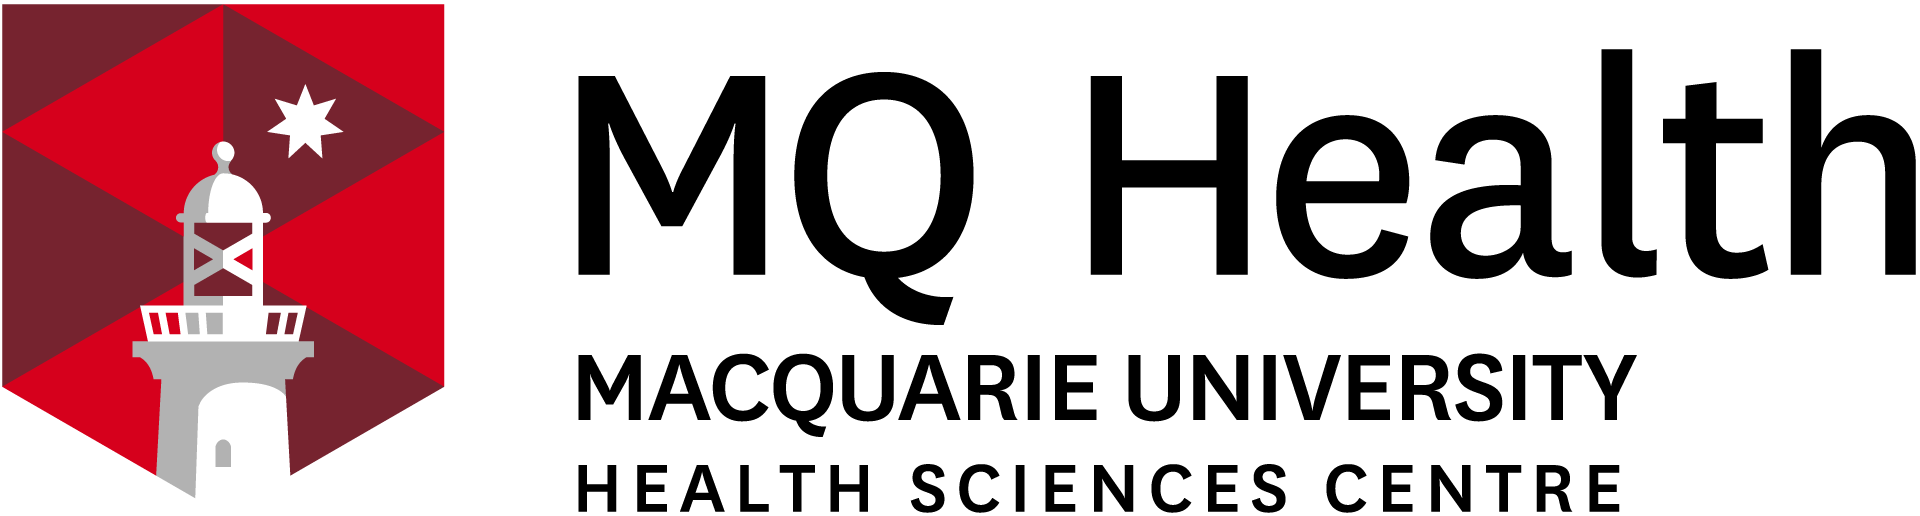 MQ Health logo